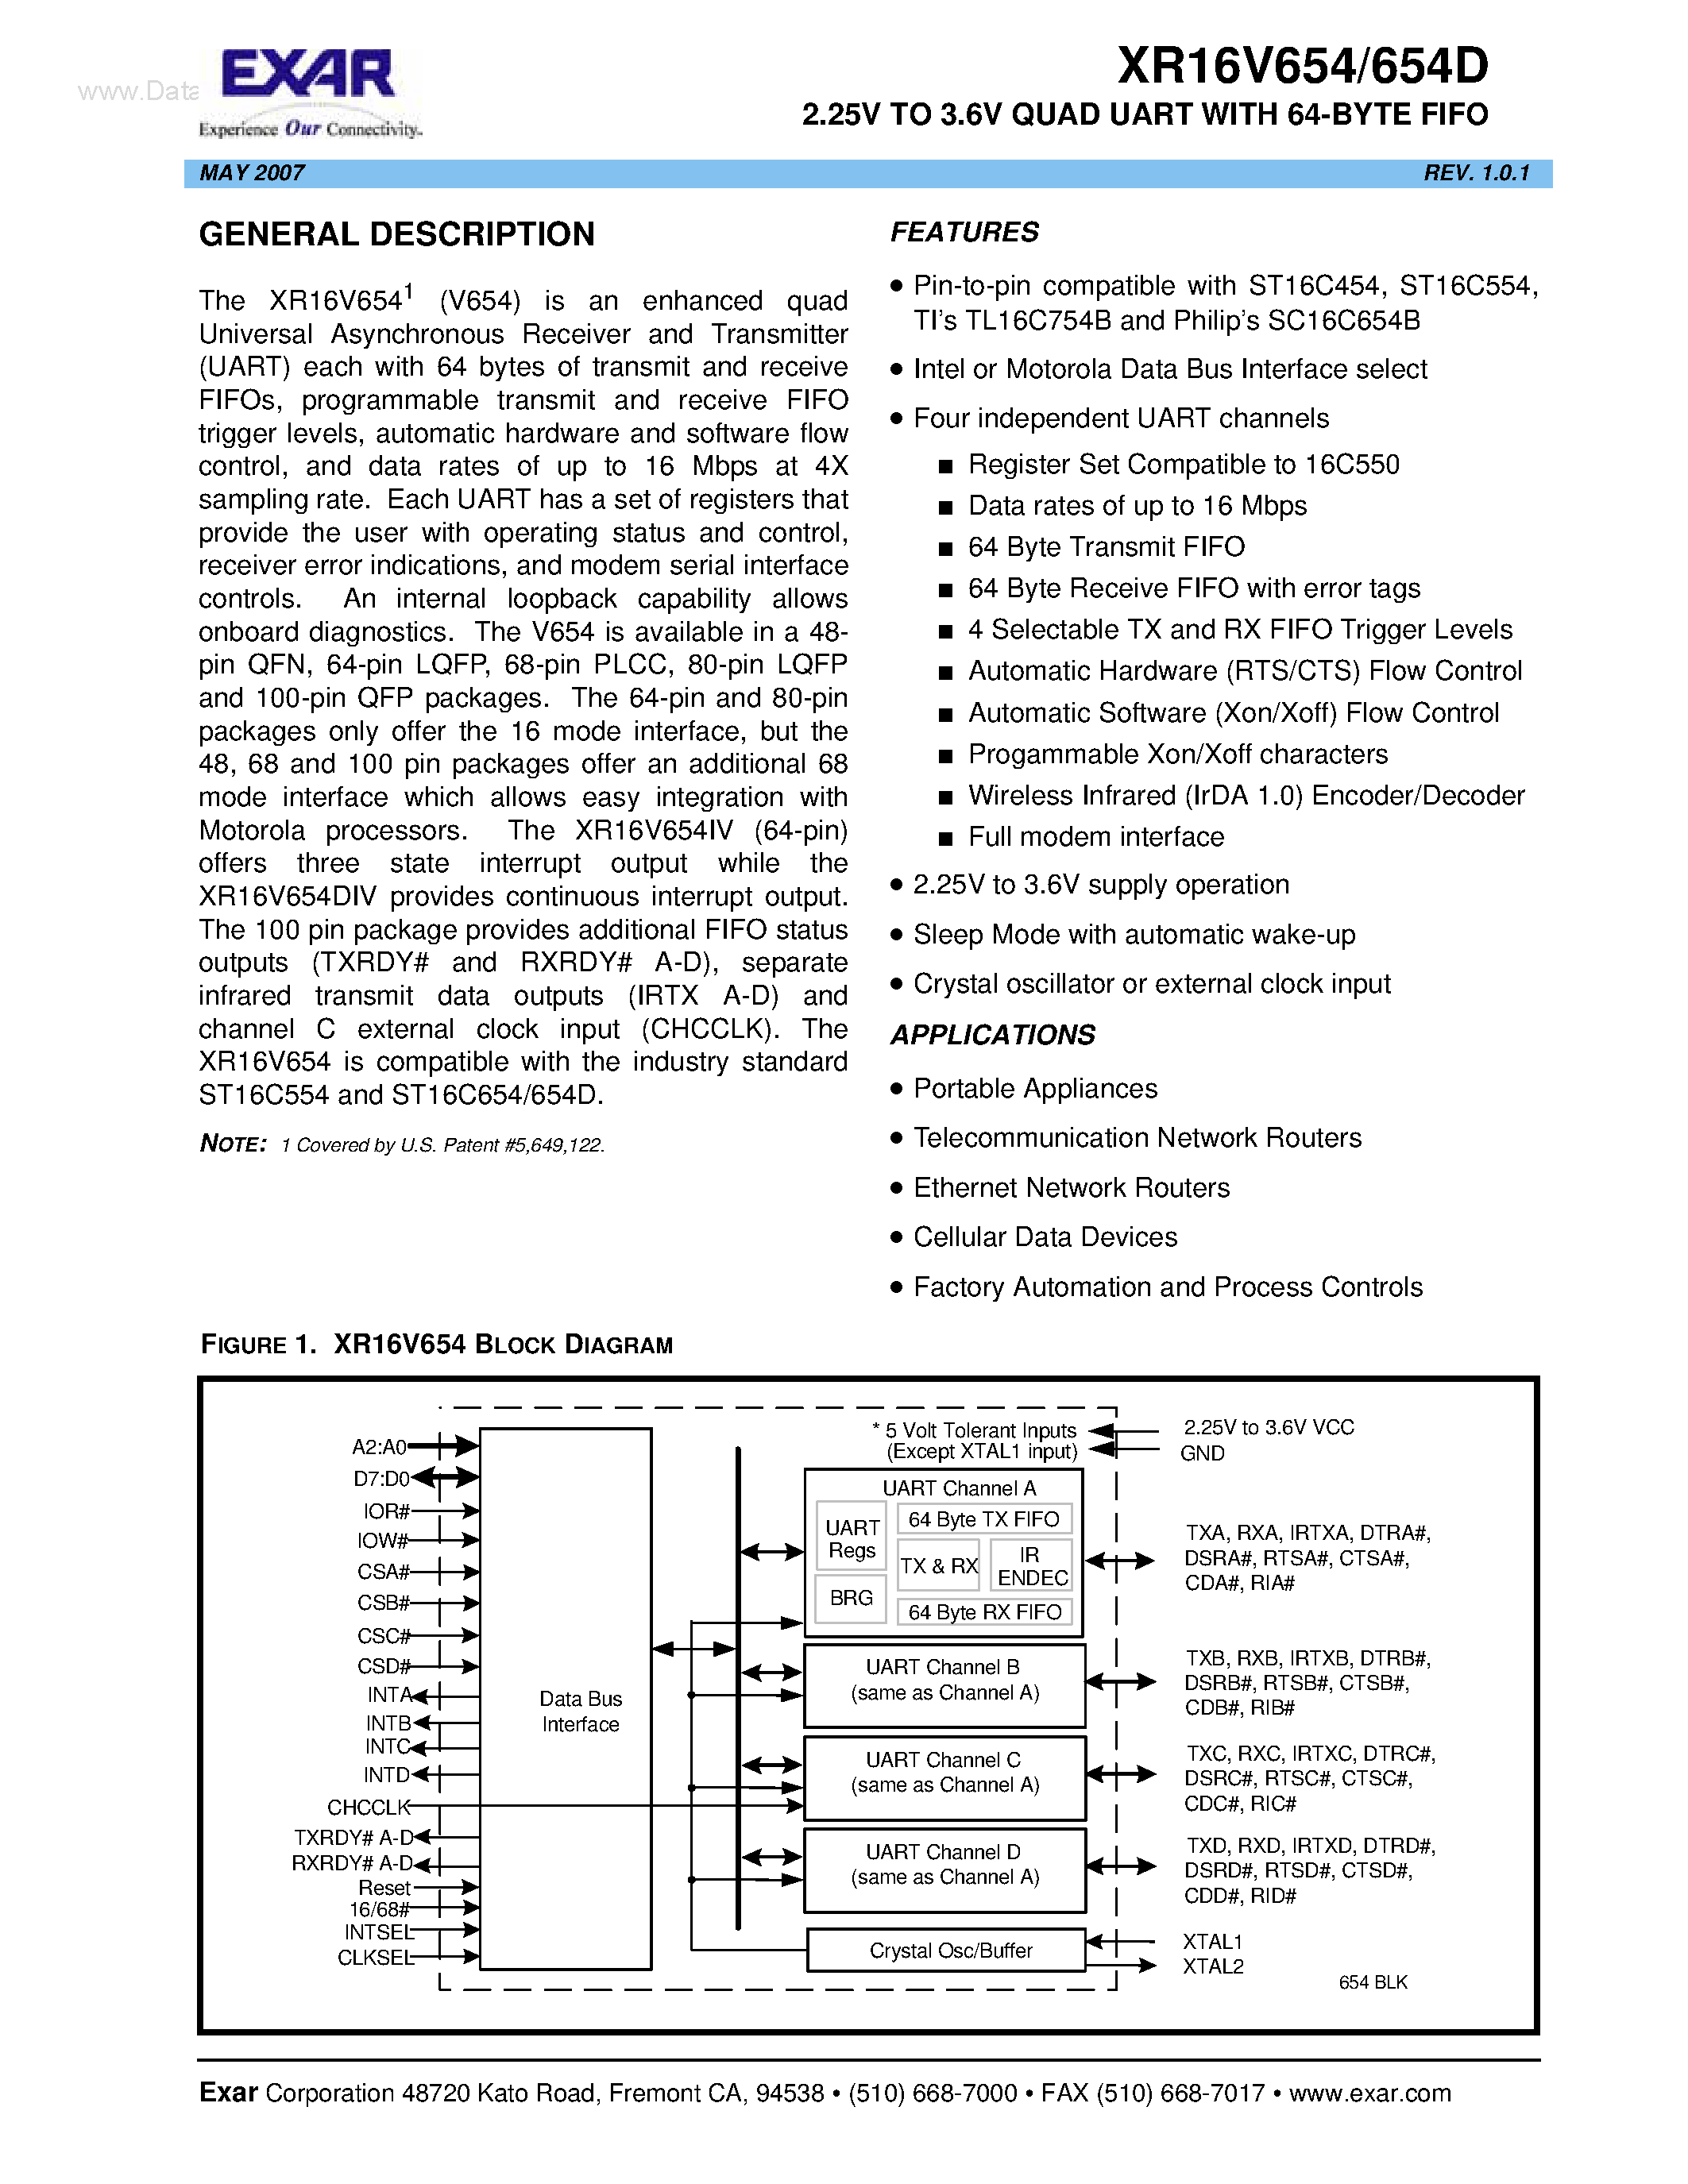 Datasheet XR16V654 - 2.25V TO 3.6V QUAD UART page 1